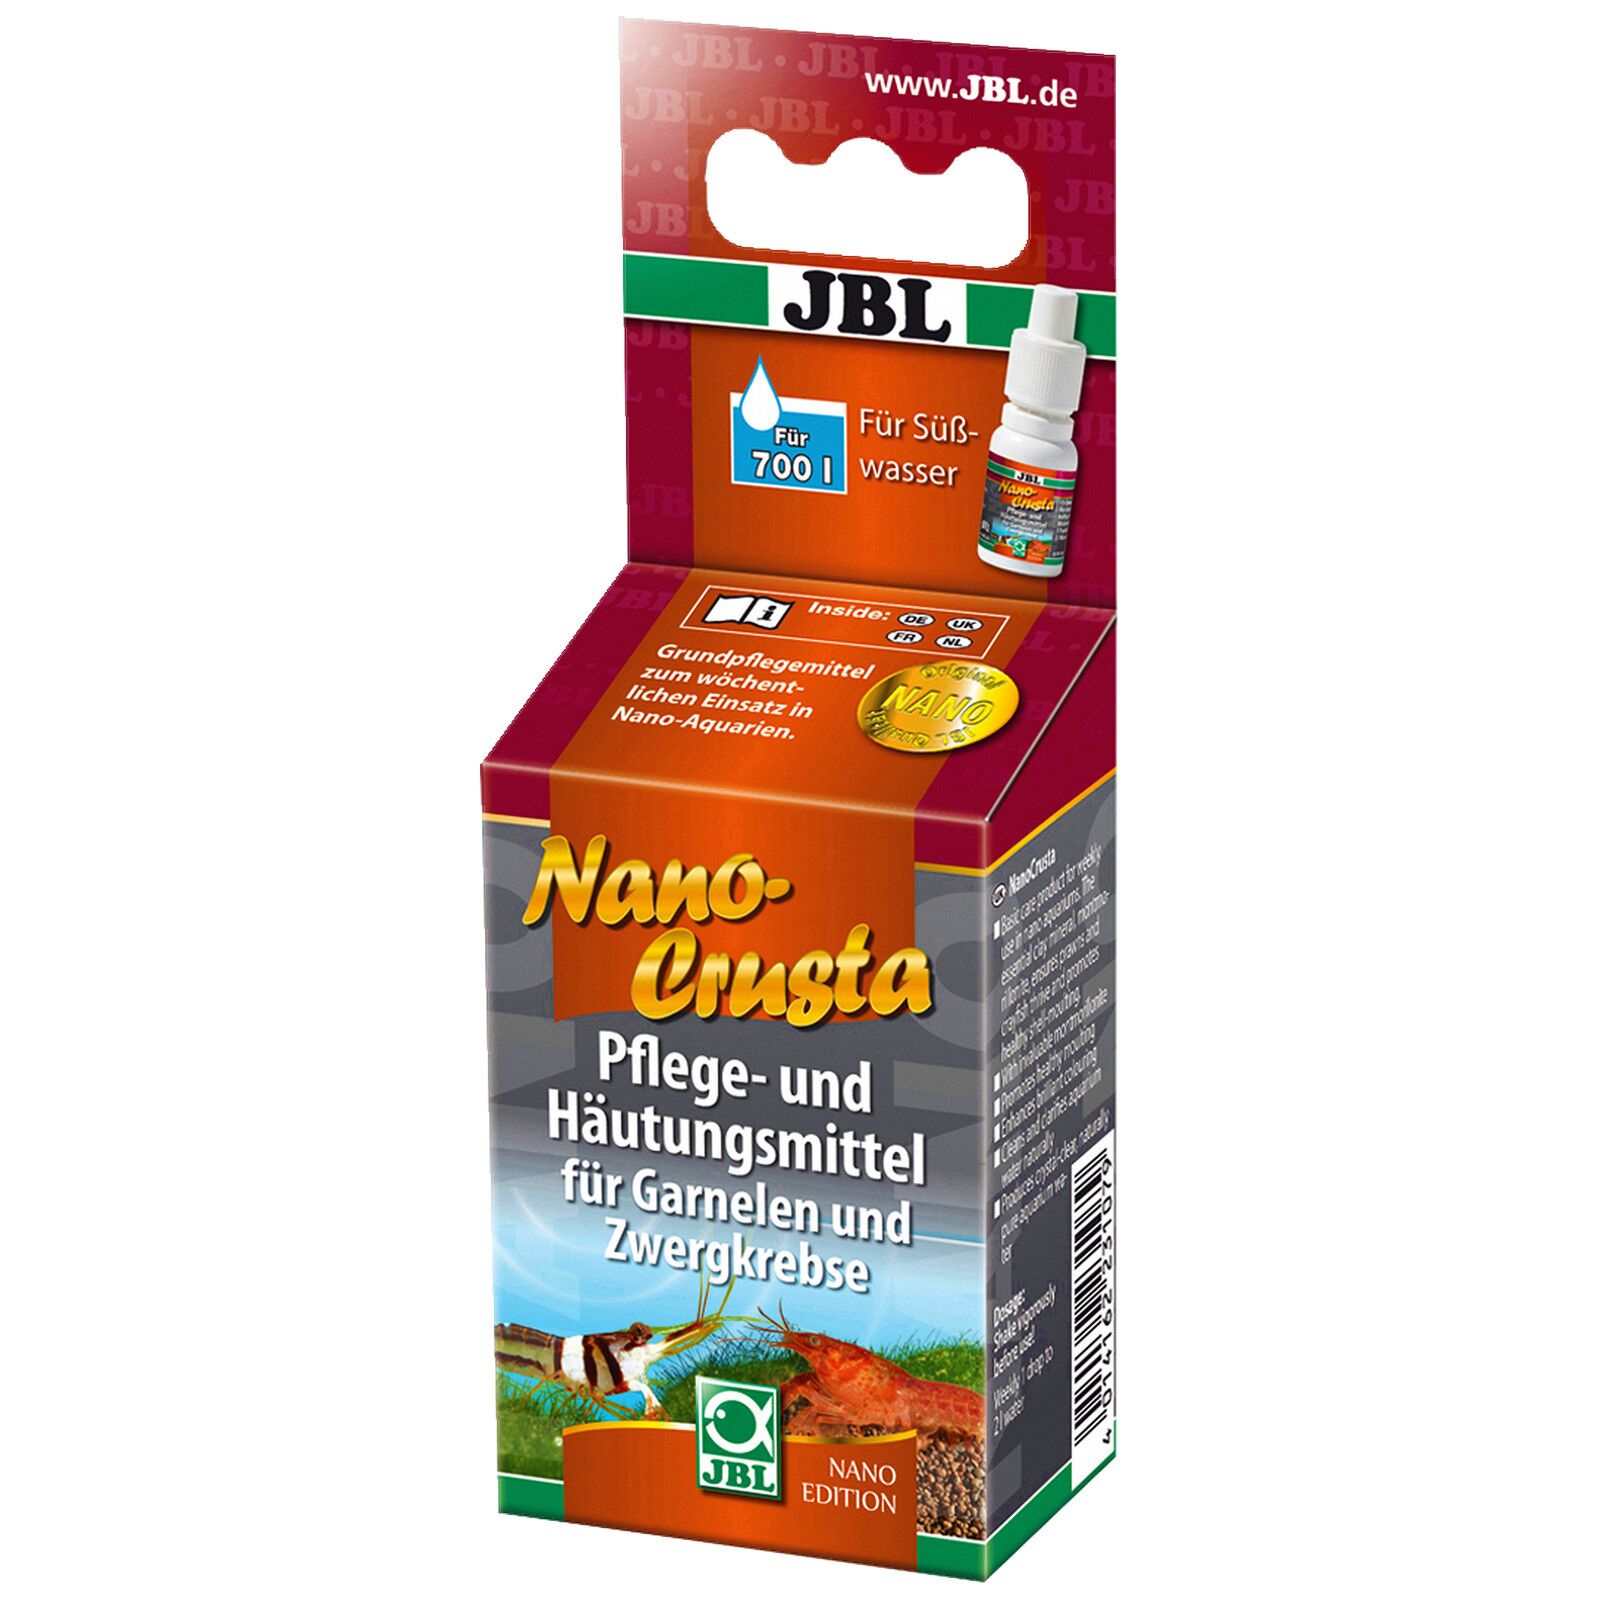 JBL - Nano - Crusta - 15 ml